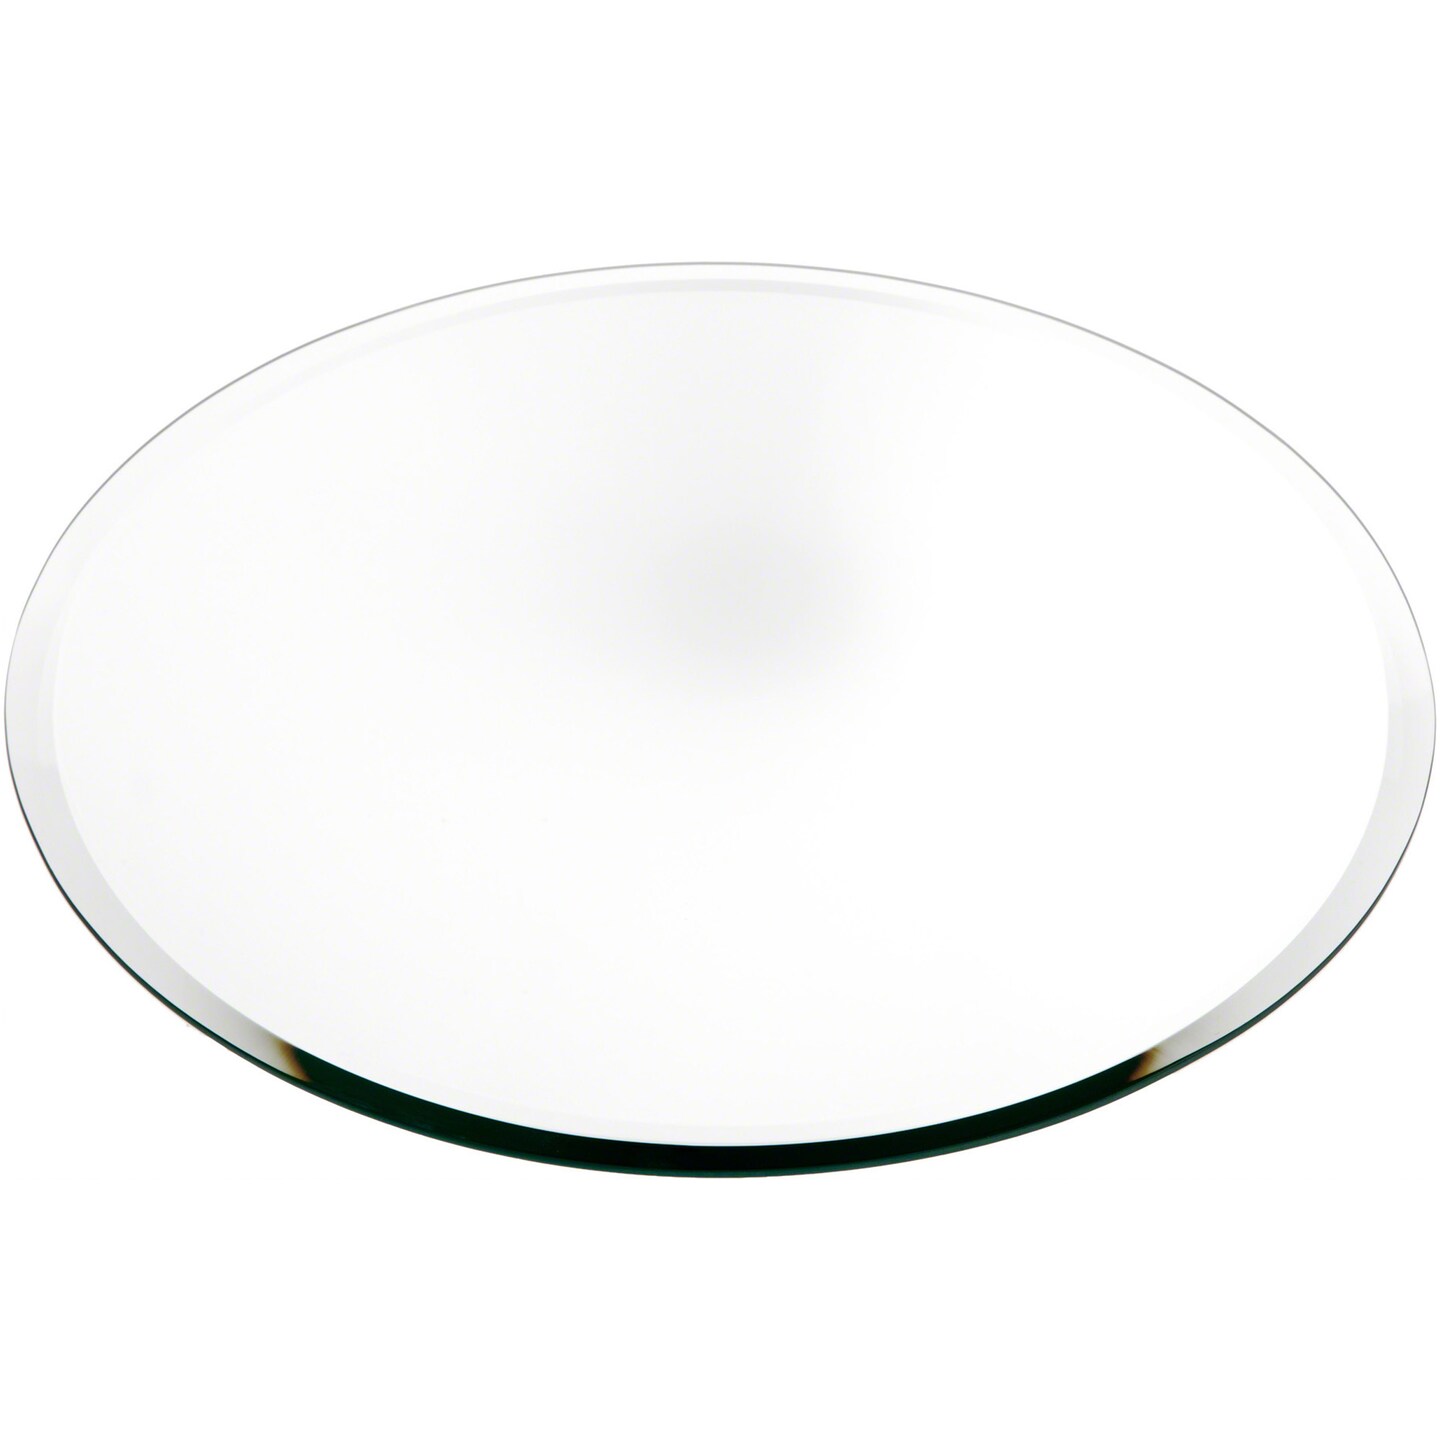 Plymor Round 5mm Beveled Glass Mirror, 14 inch x 14 inch